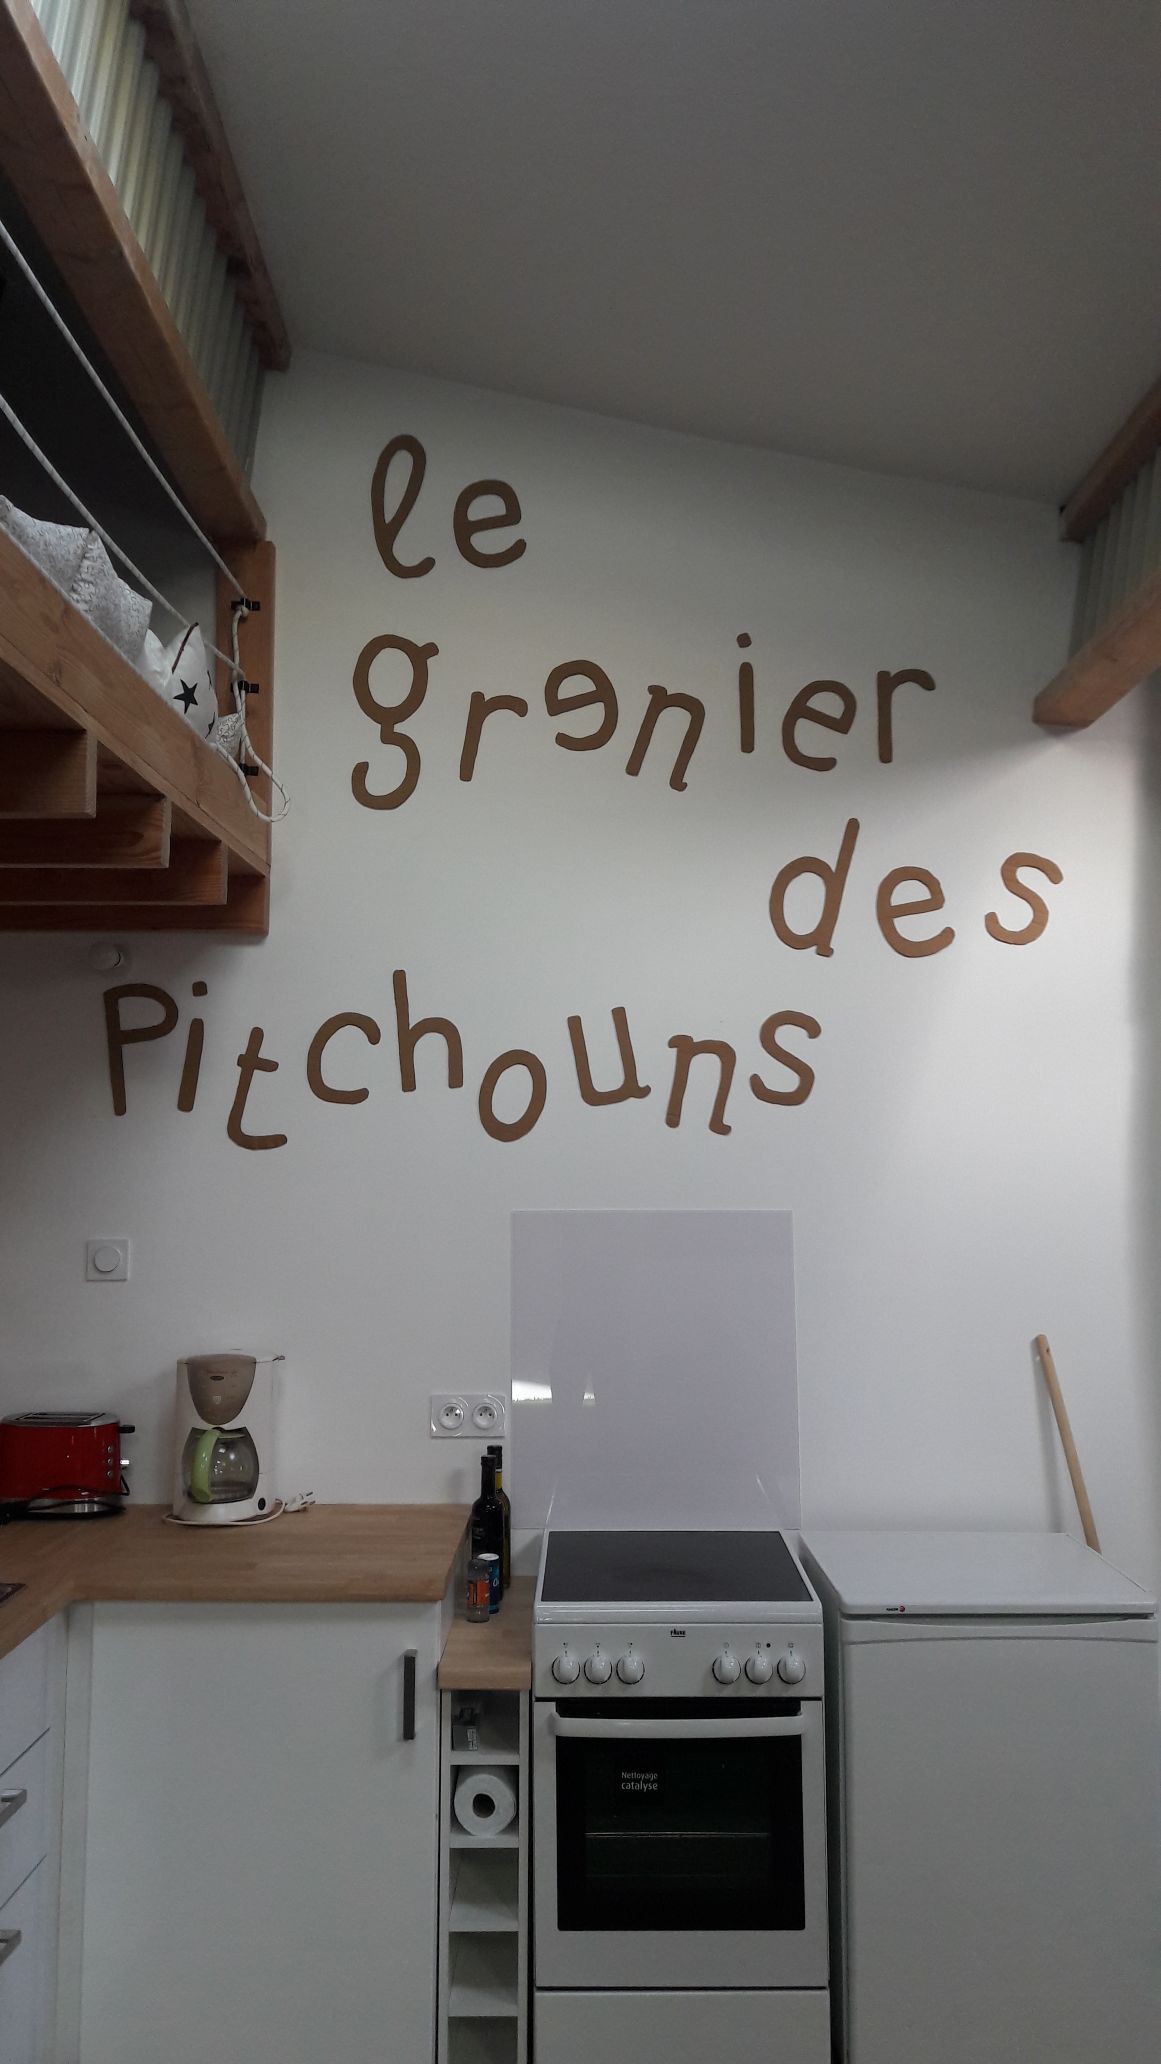 75平方米的阁楼"Le Grenier des pitchouns"